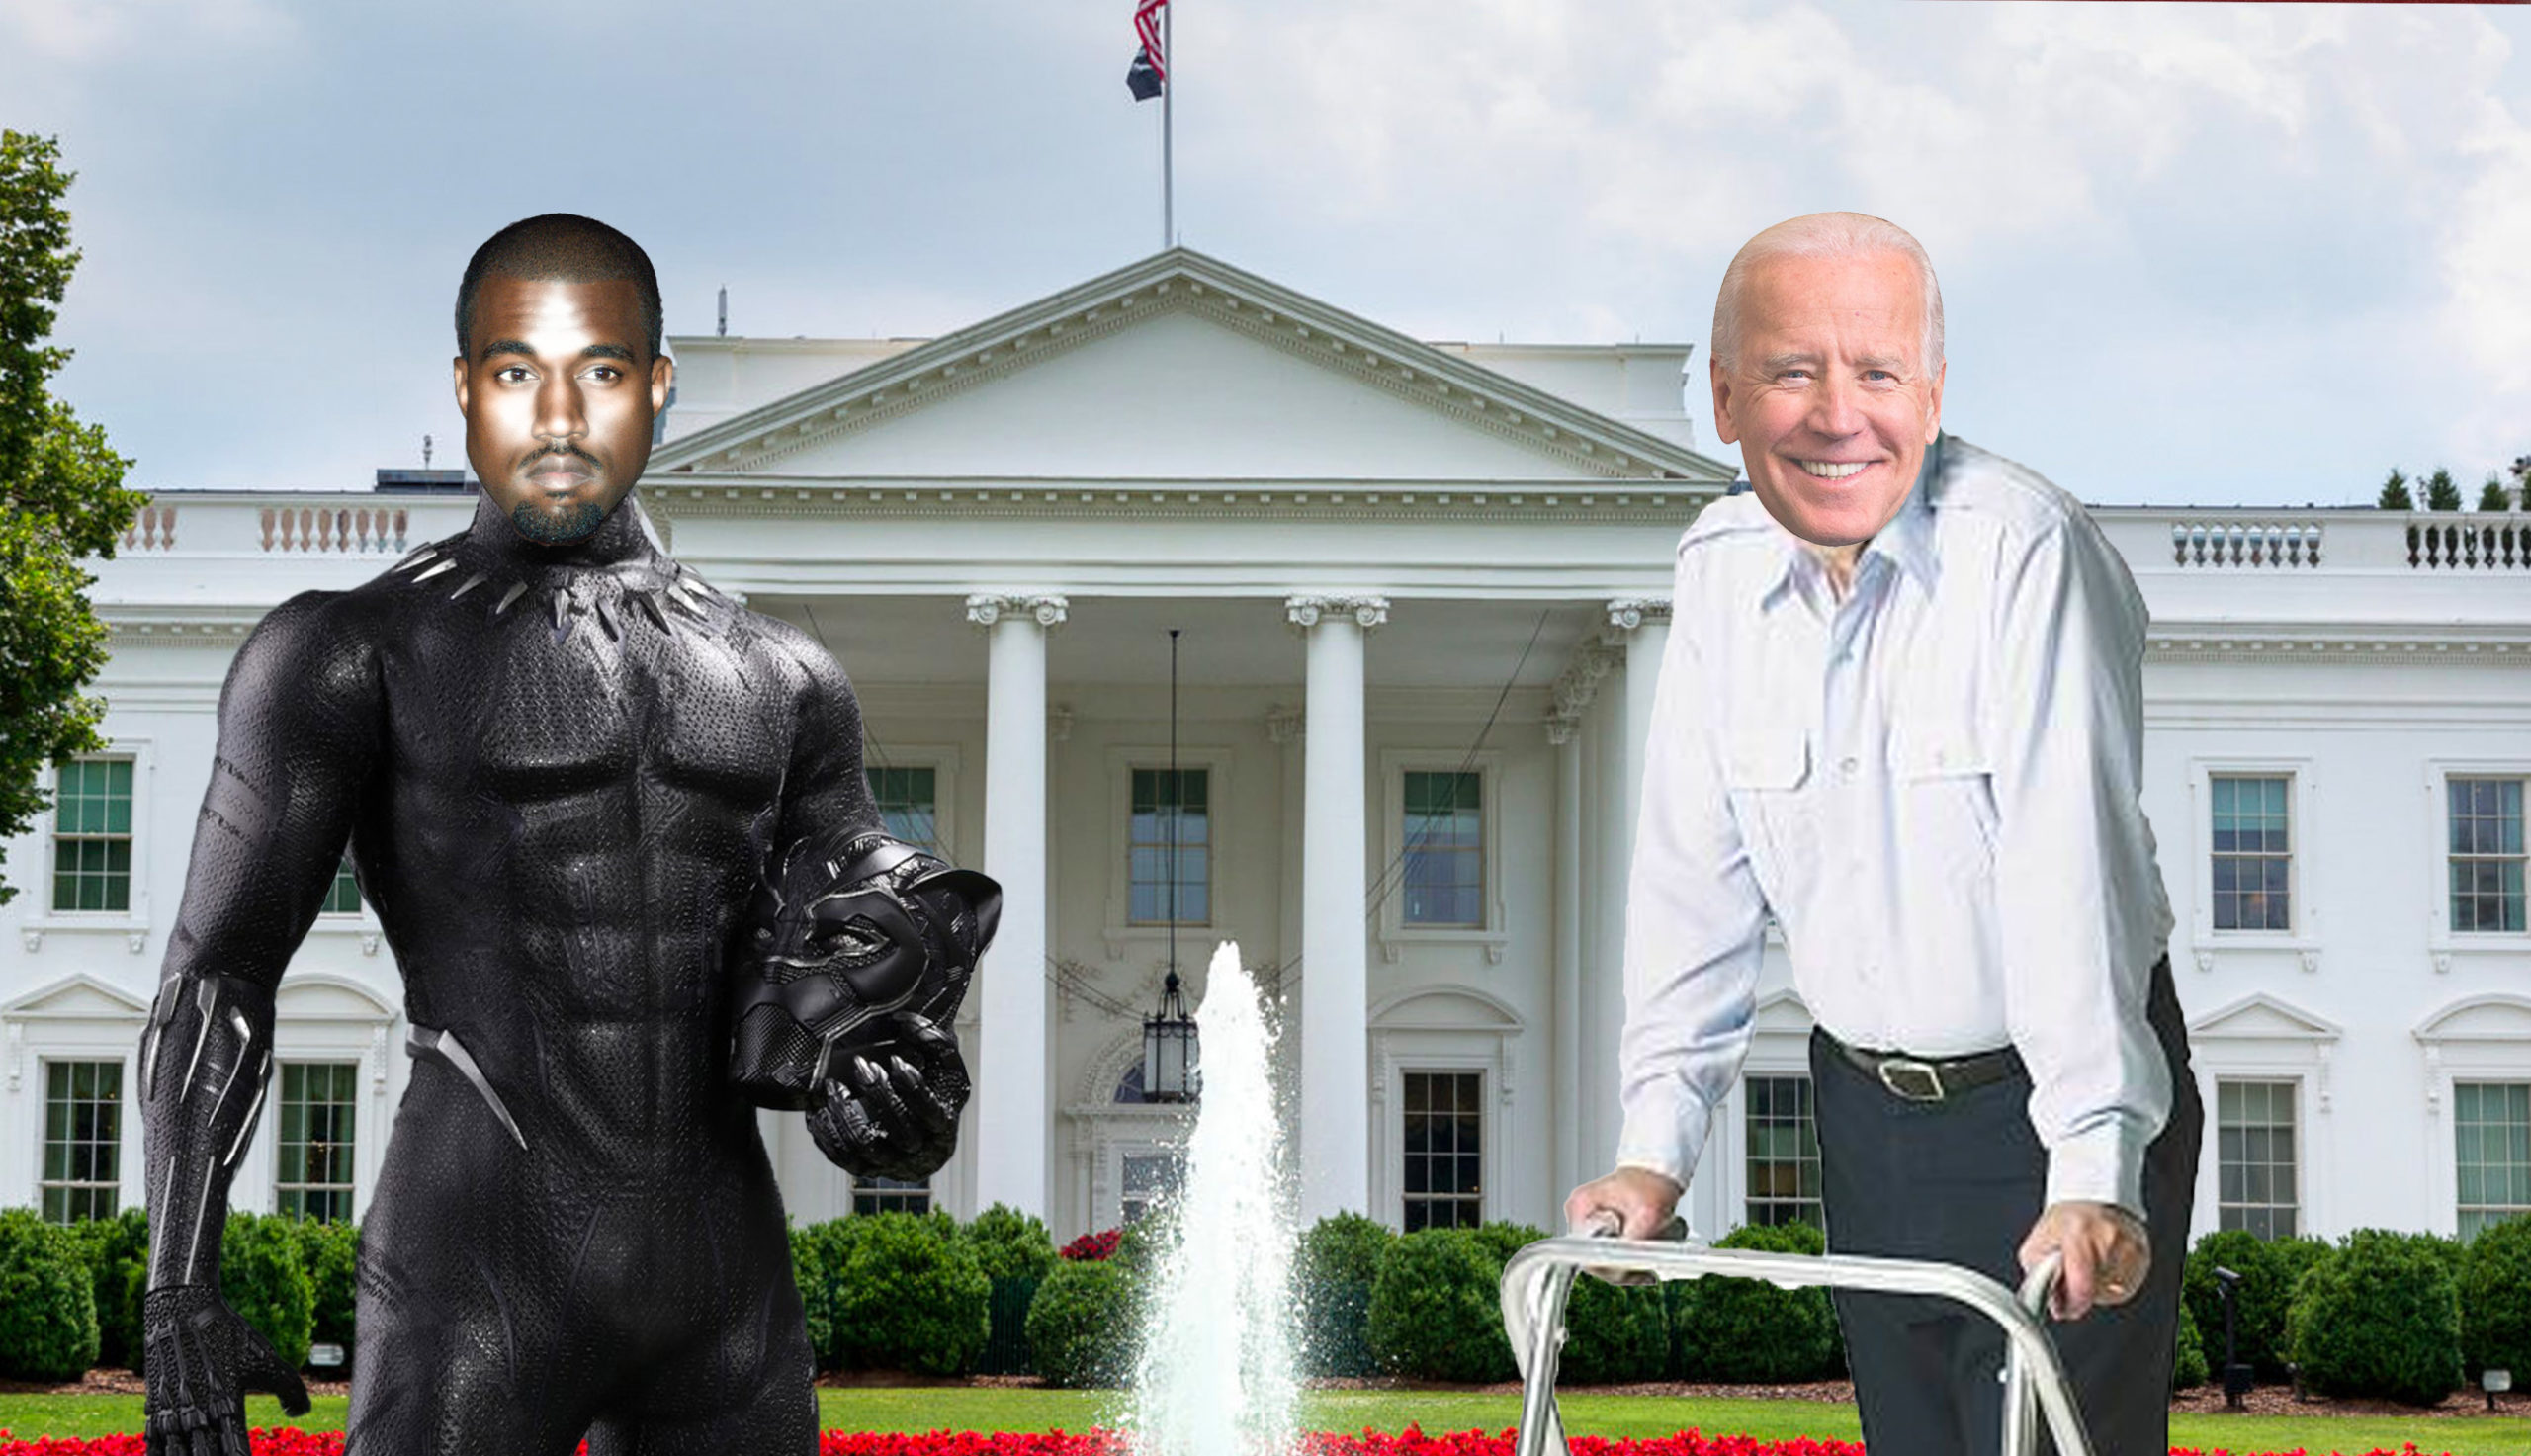 Joe Biden with walker, Kanye West as Black Panther Wakanda, White House